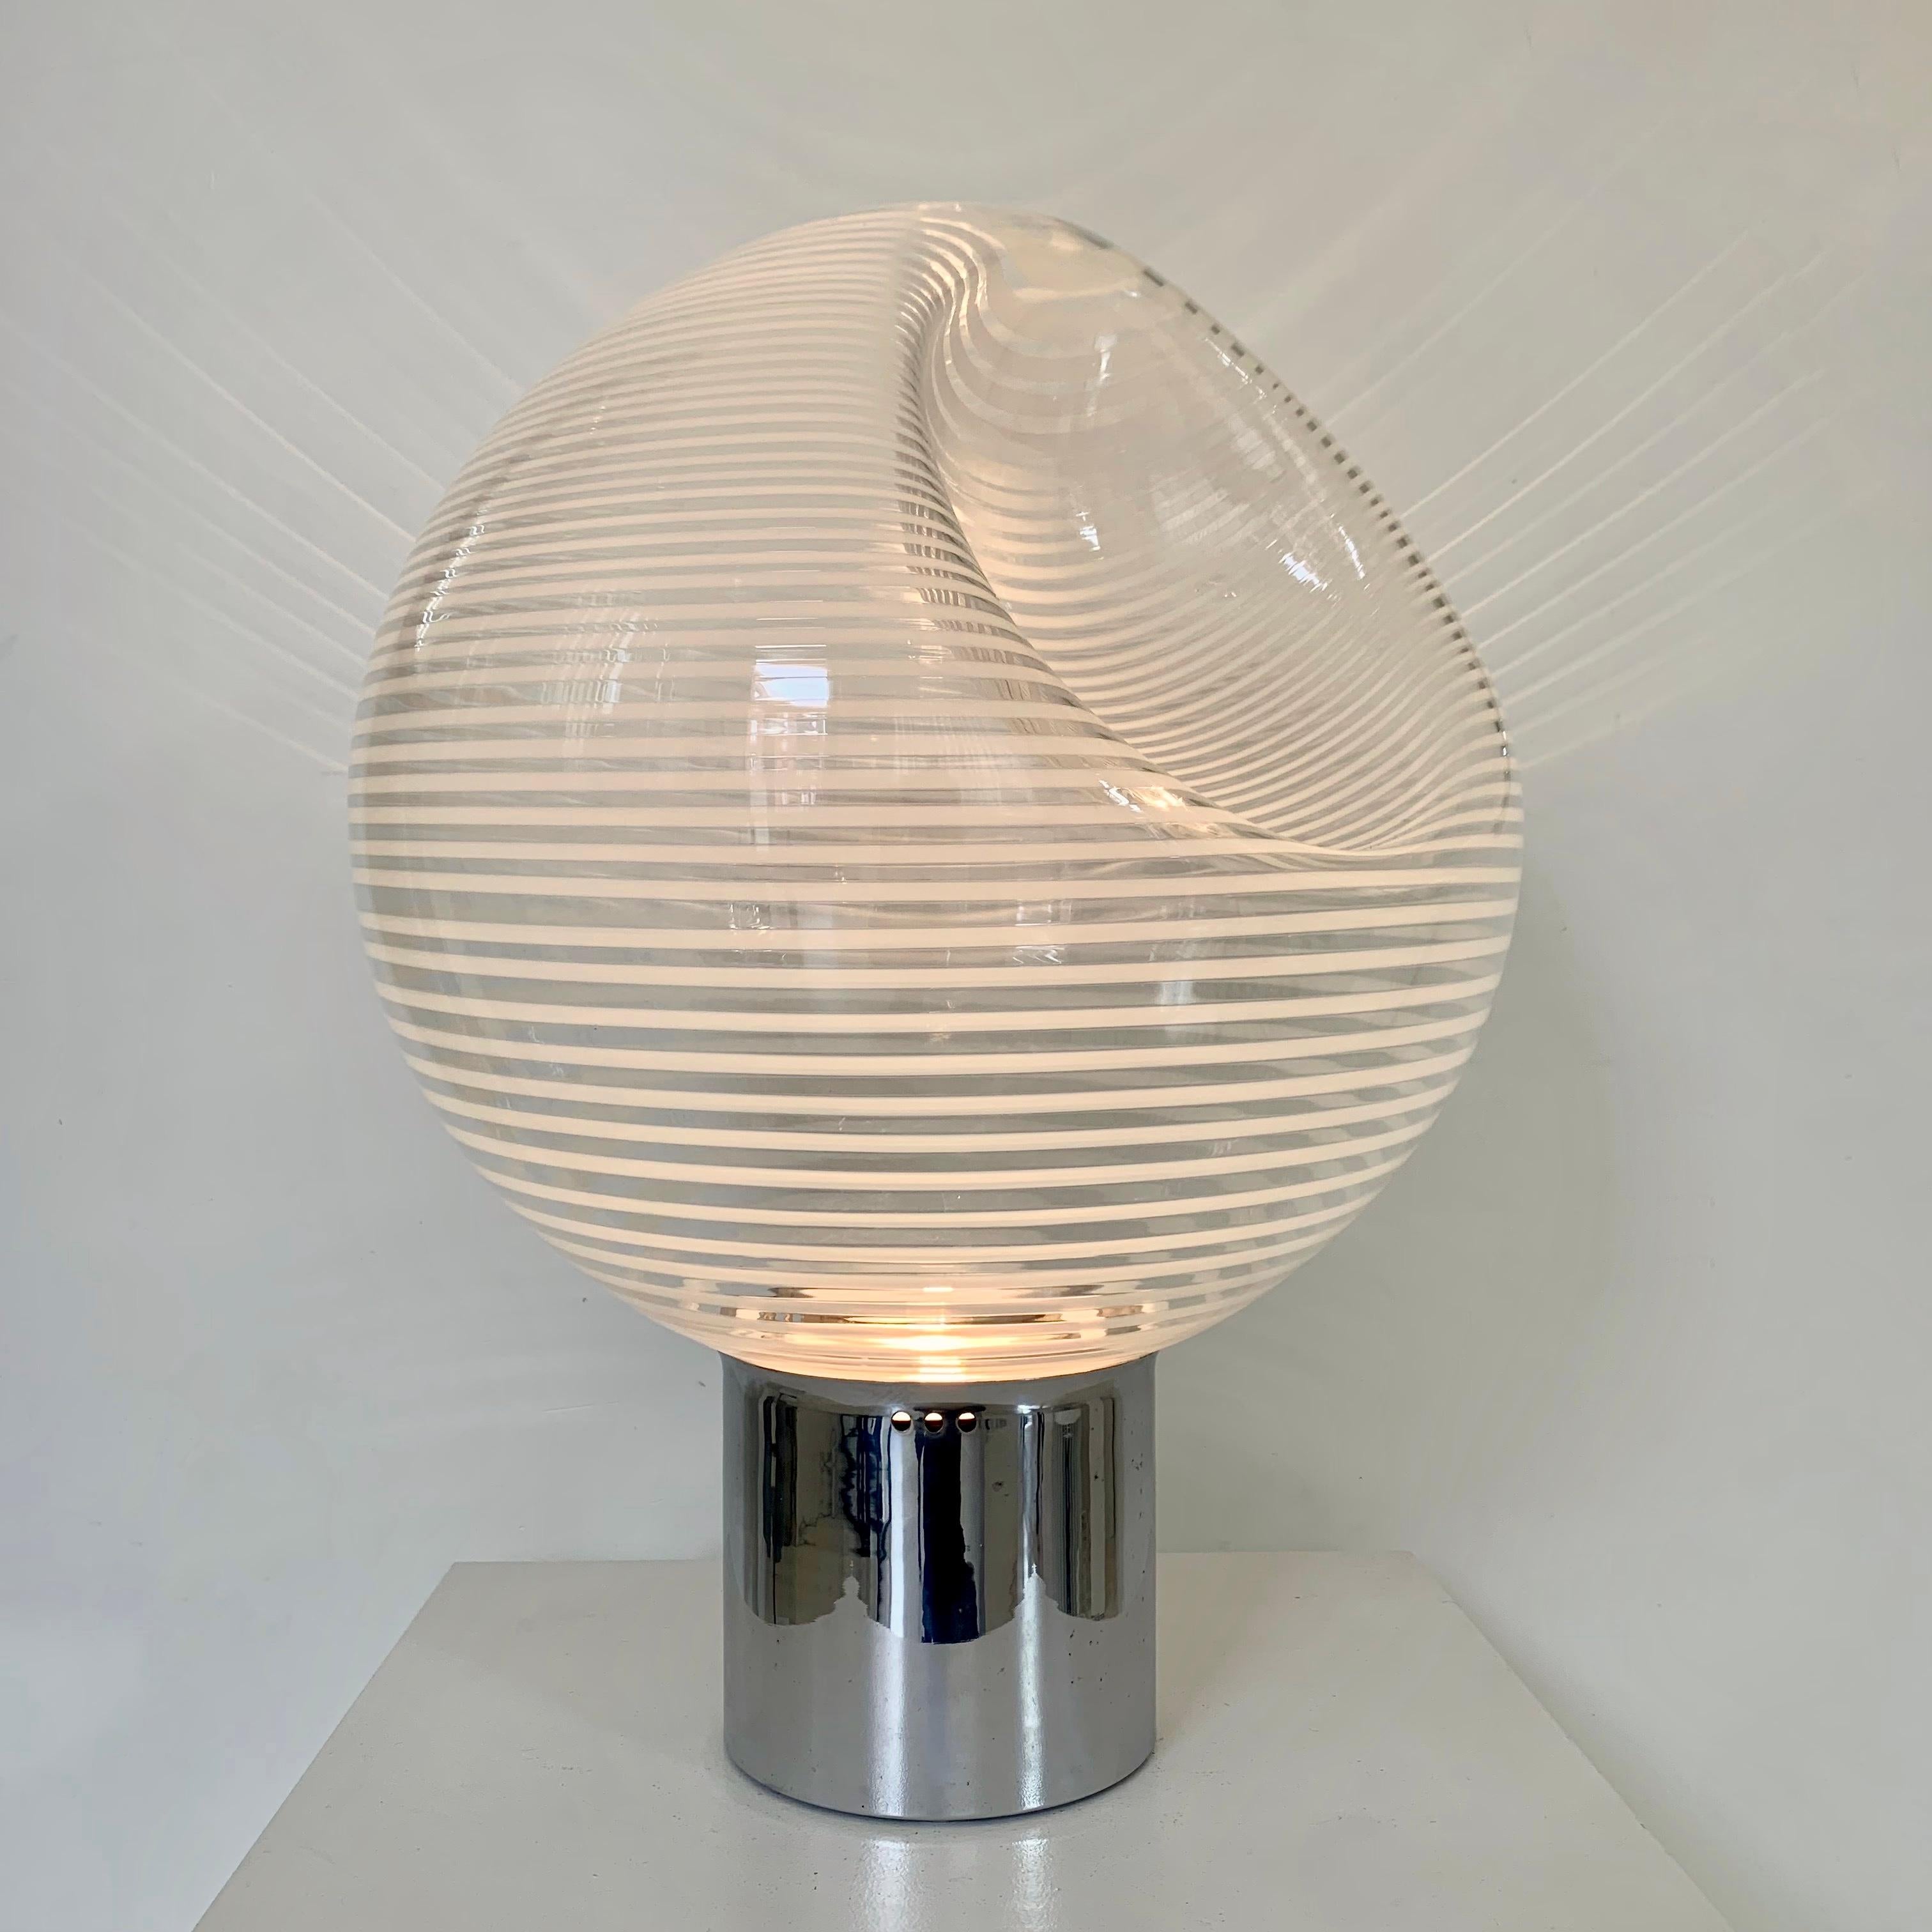 Mid-20th Century Vistosi Glass Table Lamp, Corba model, circa 1960, Italy. For Sale